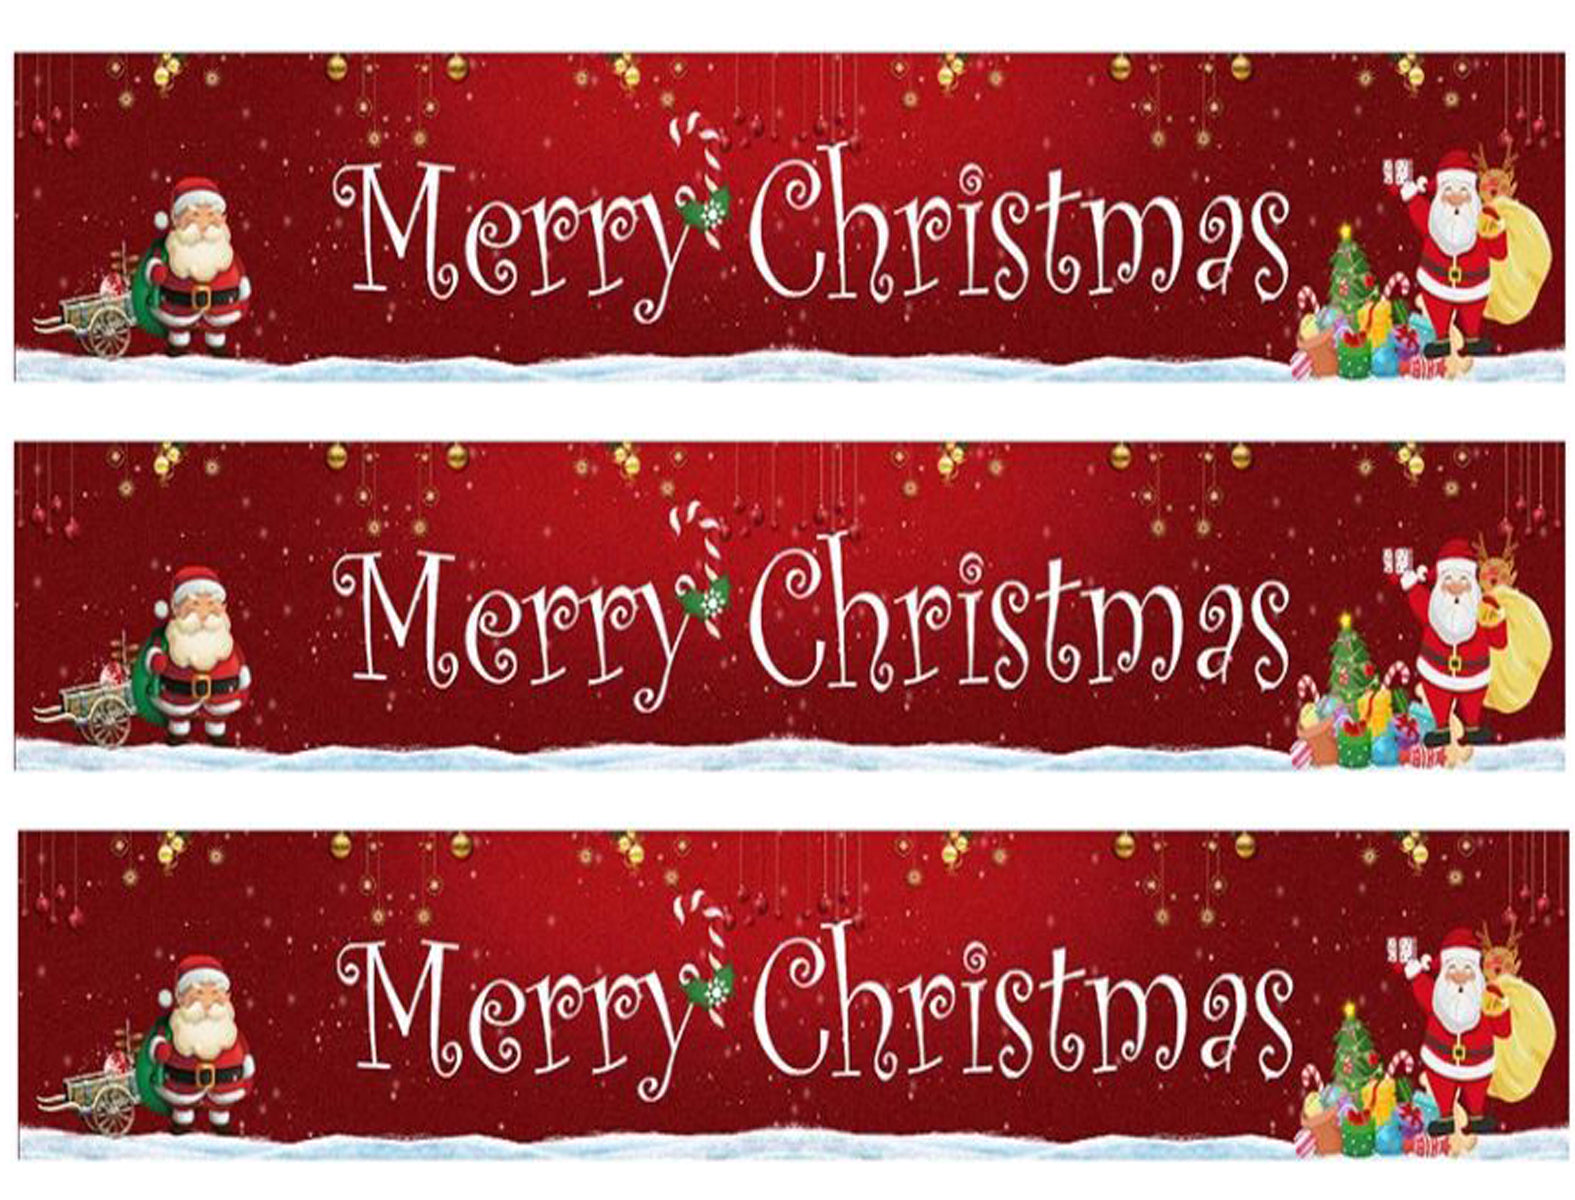 Merry Christmas Santa Claus St. Nick Christmas Tree Edible Cake Topper Image Strips ABPID55182